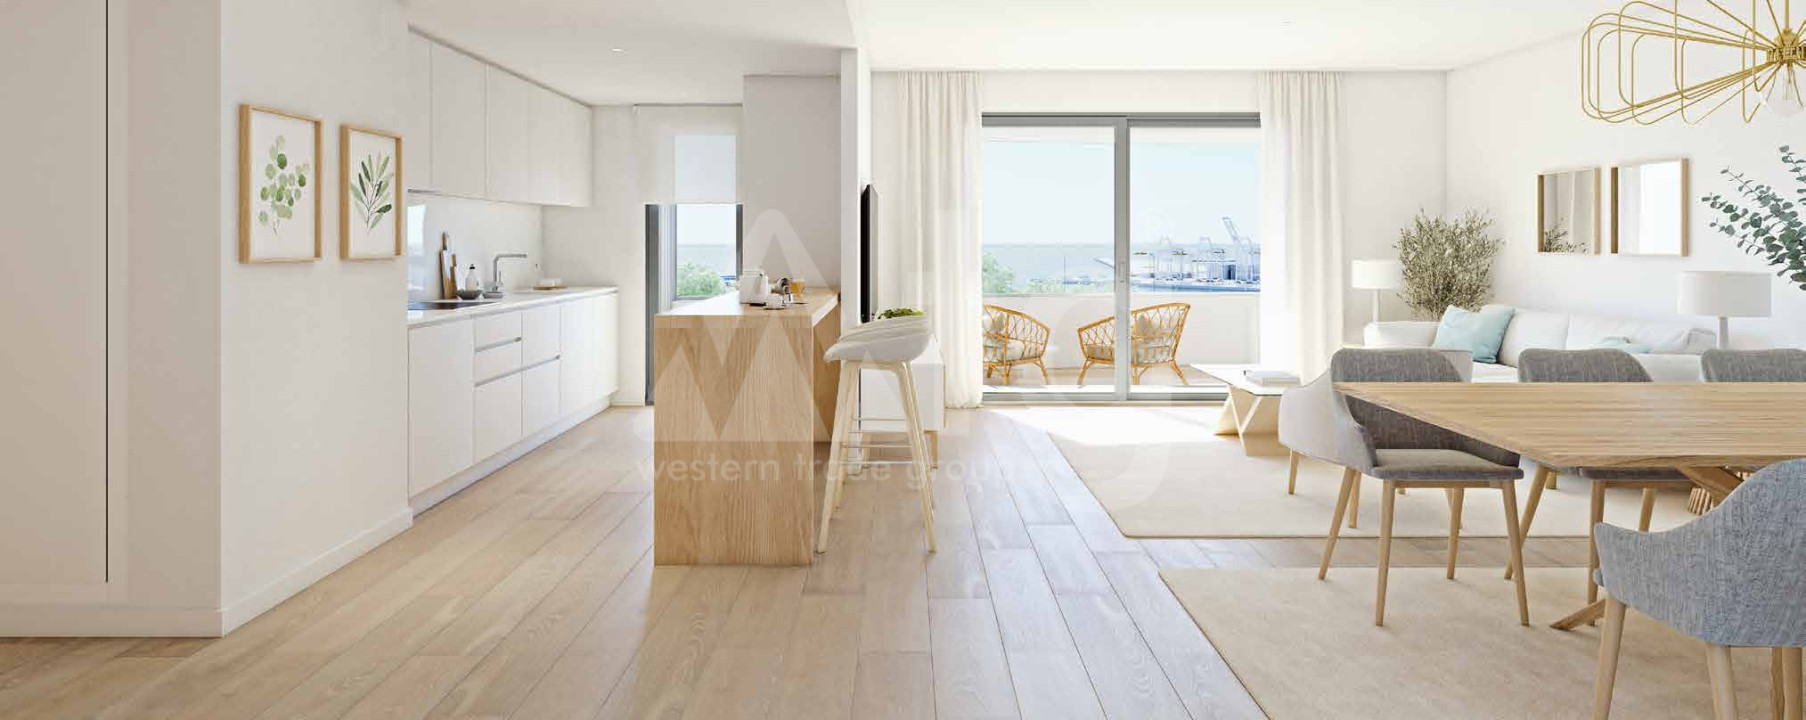 3 bedroom Apartment in Alicante - AEH25887 - 3